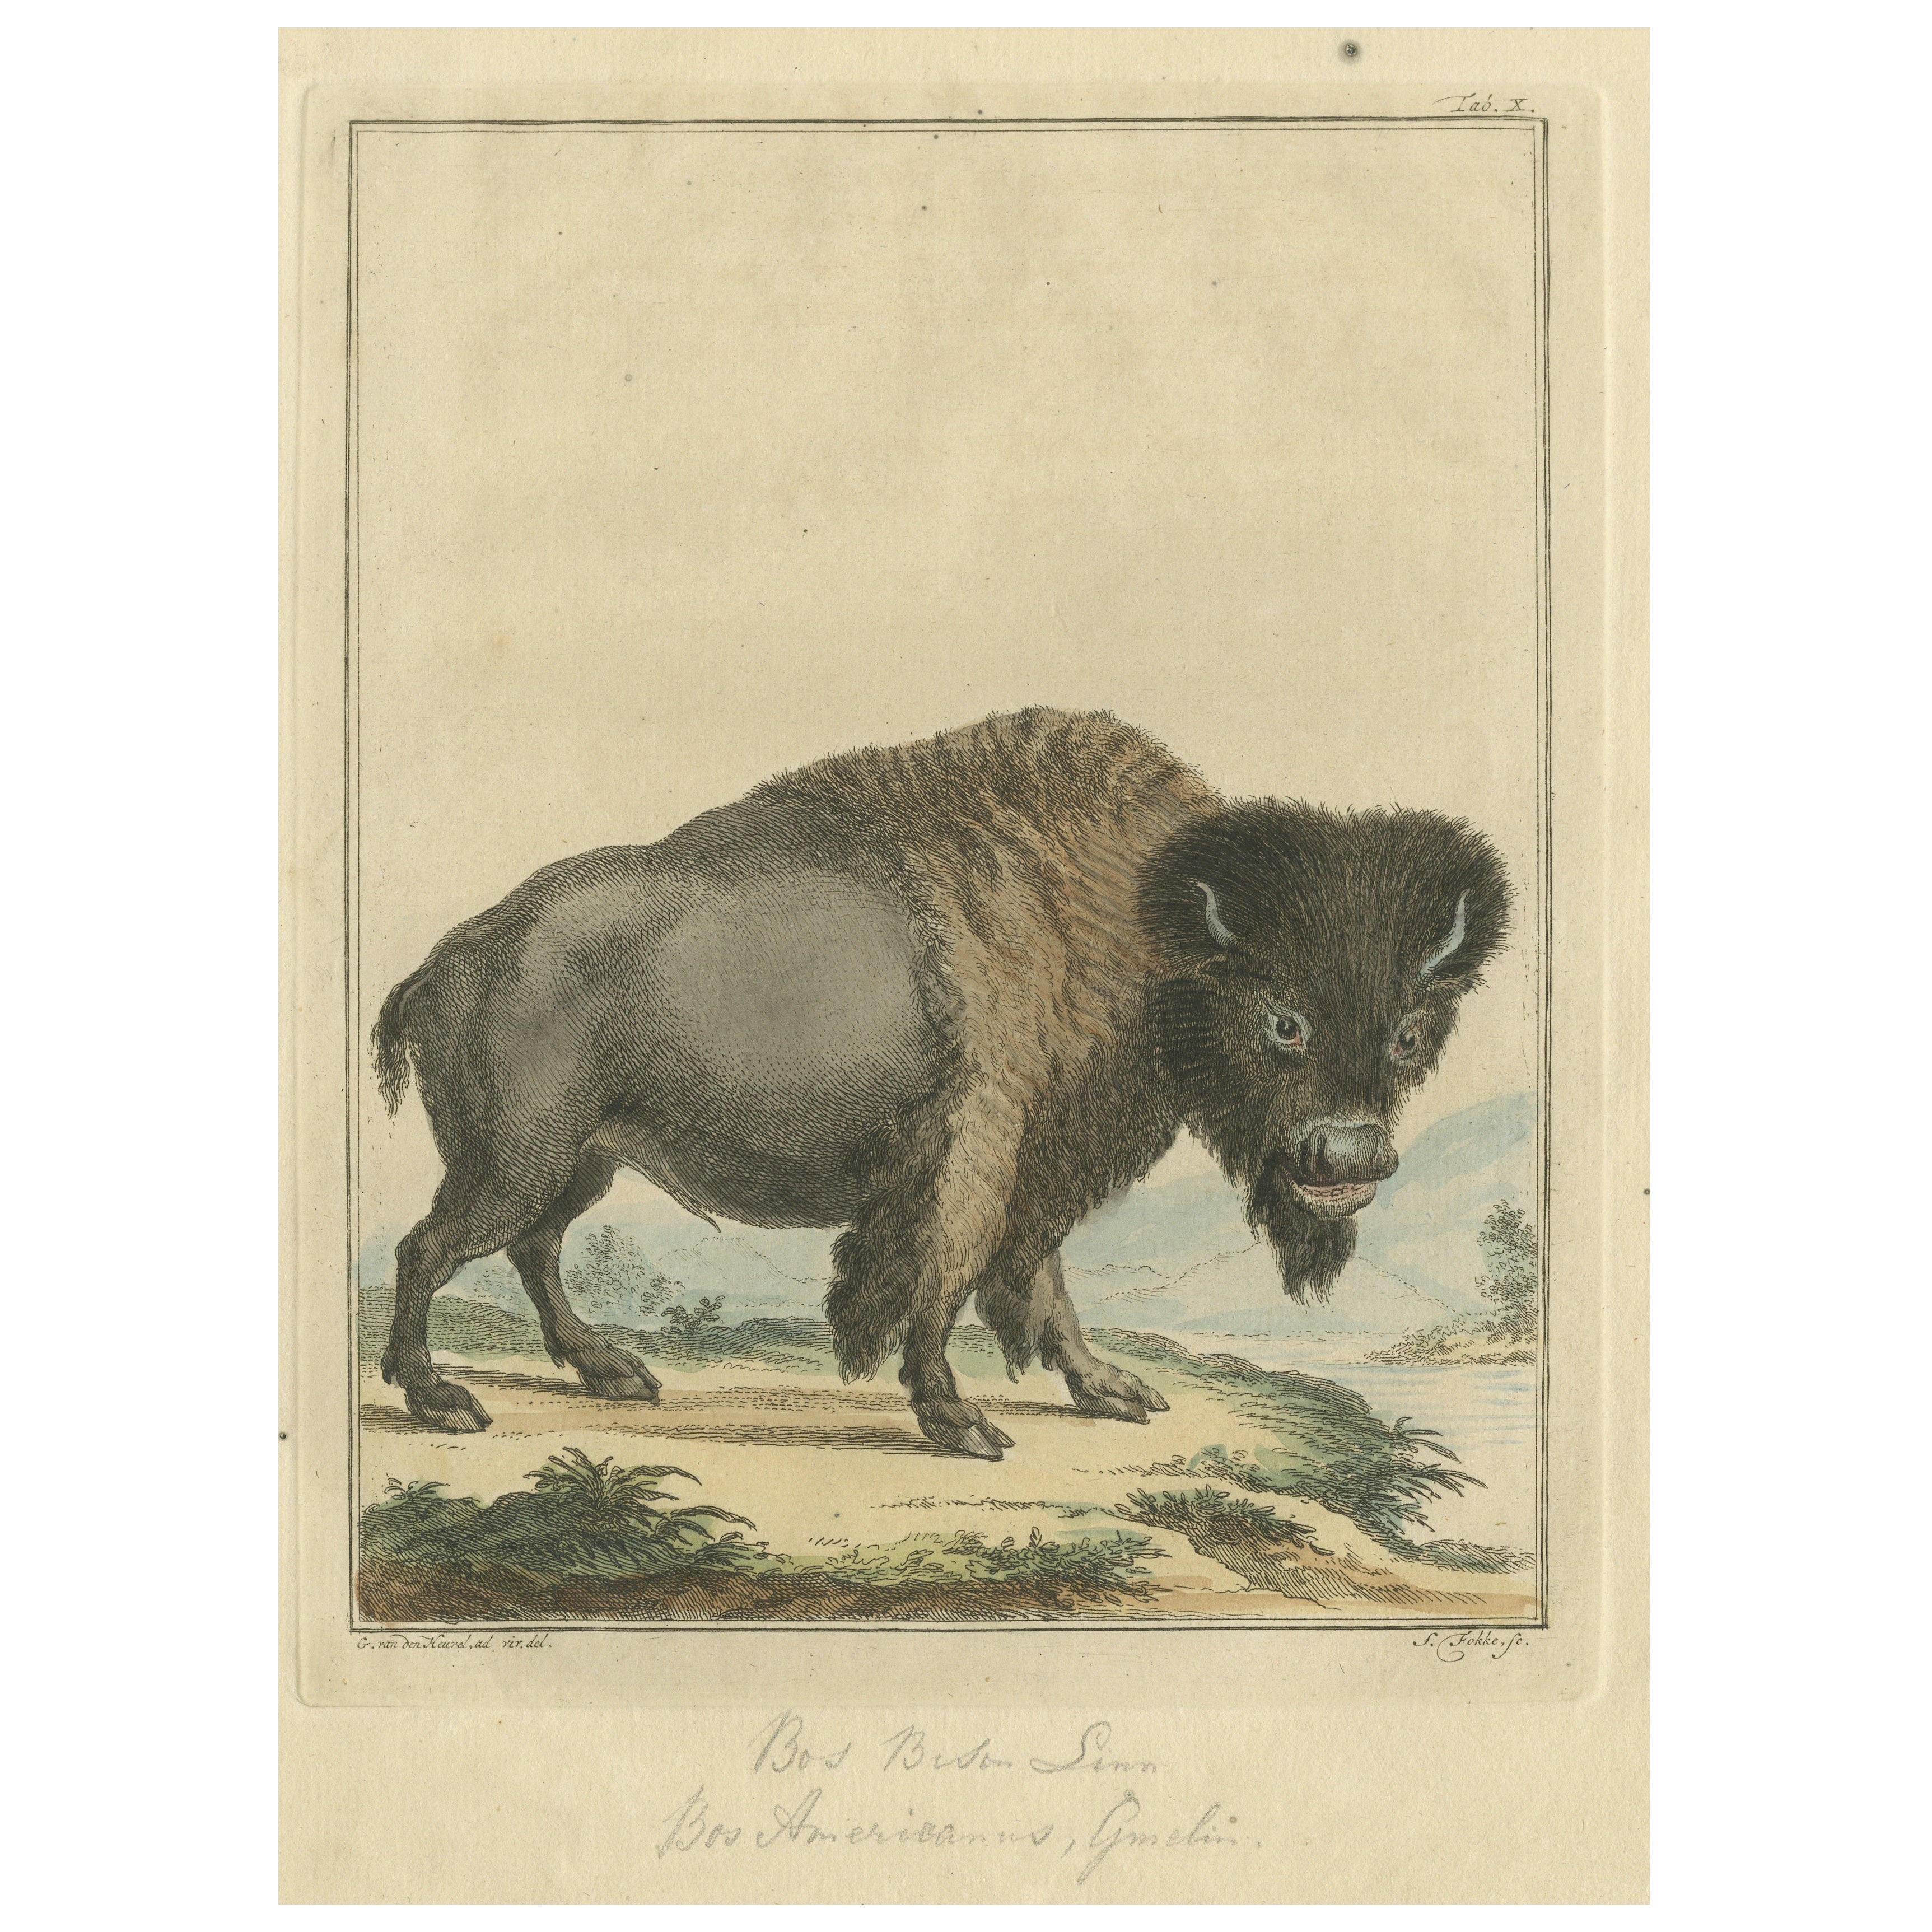 Original Antique Print of a Bison